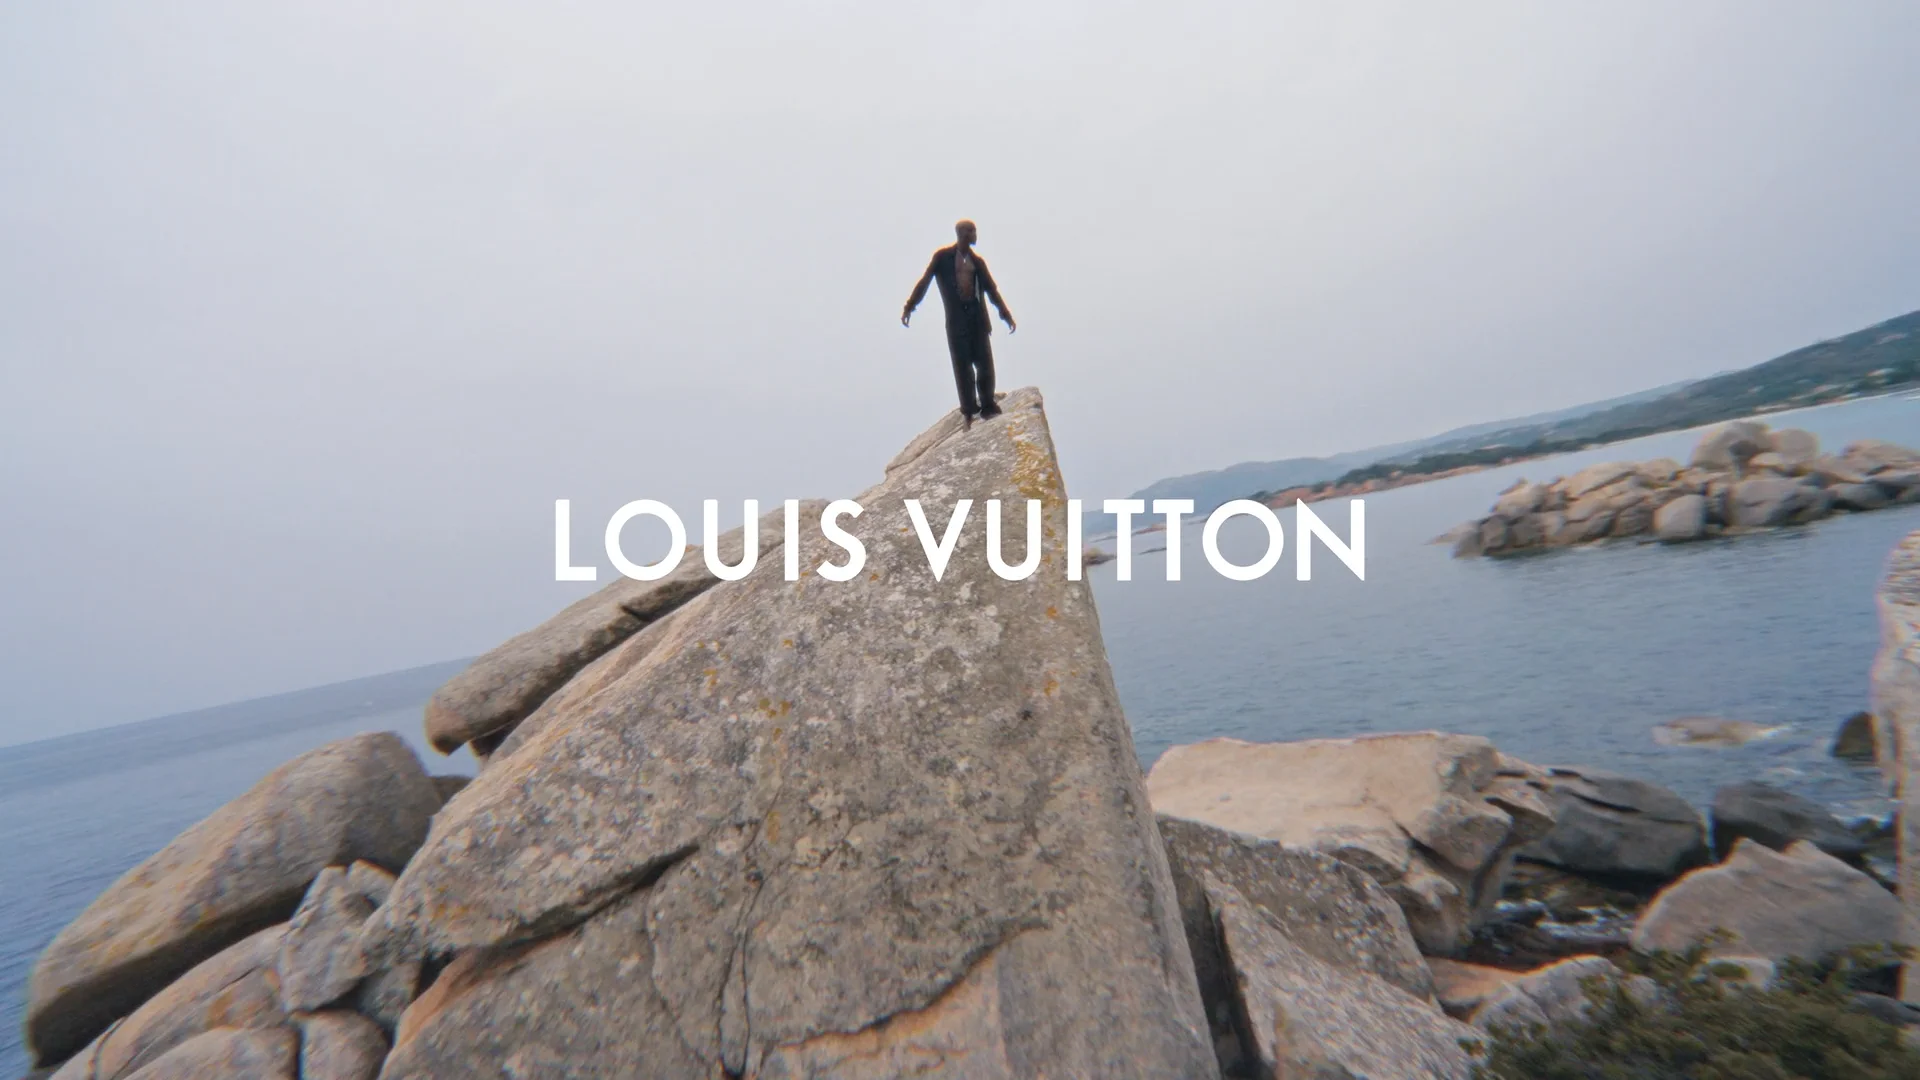 LOUIS VUITTON CRUISE 2018 on Vimeo